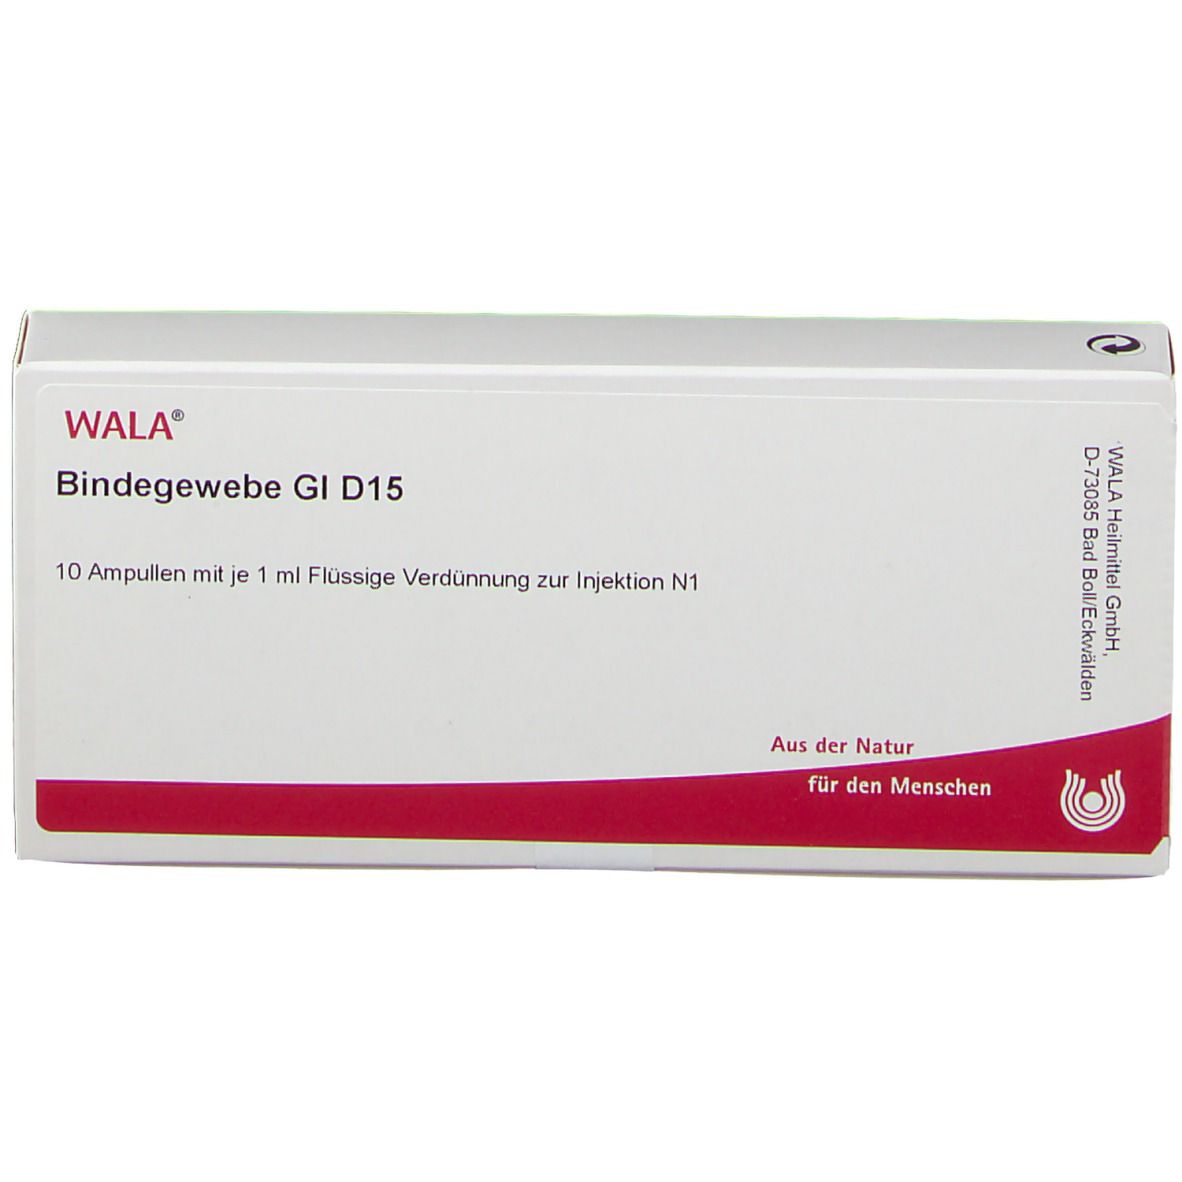 WALA® Bindegewebe Gl D 15